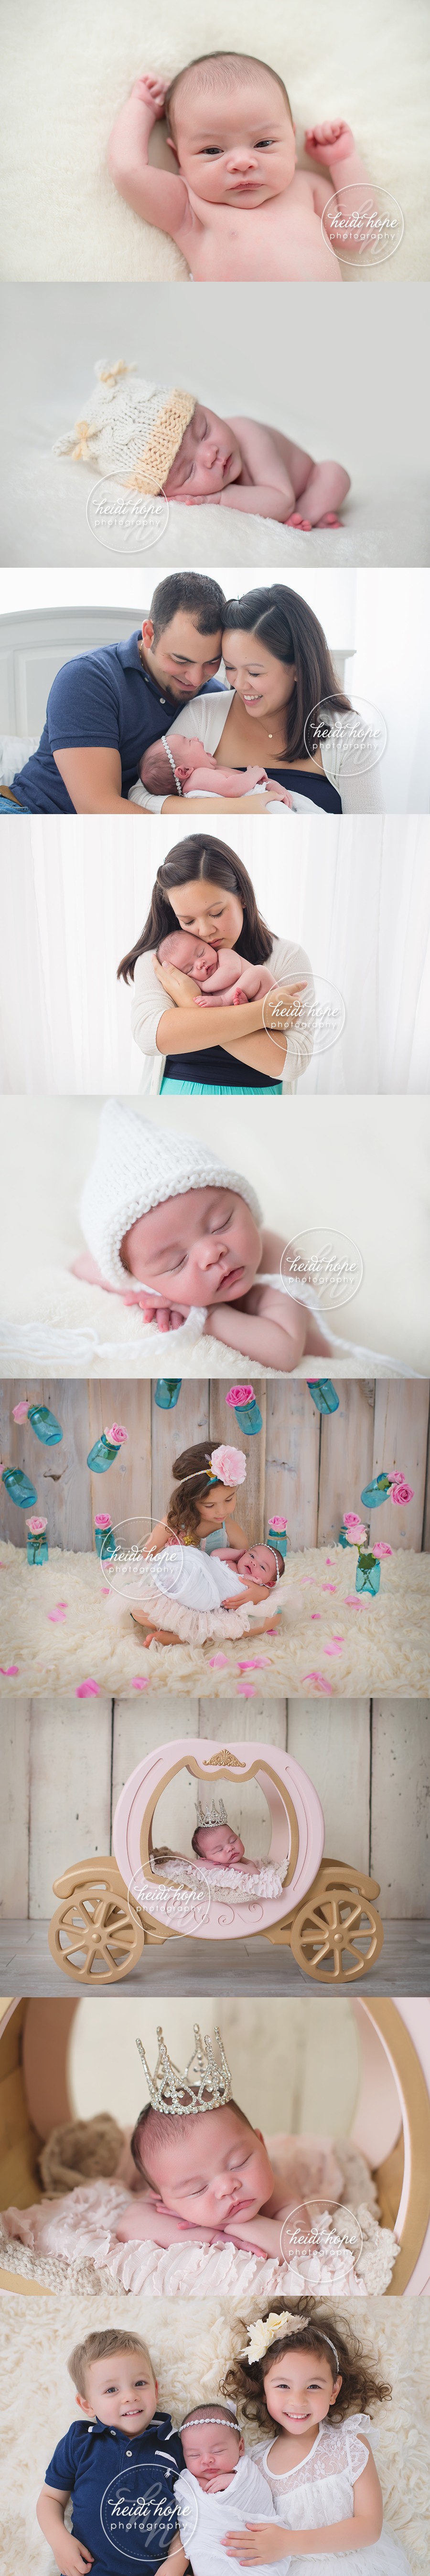 boston newborn photographer creates newborn and family portraits